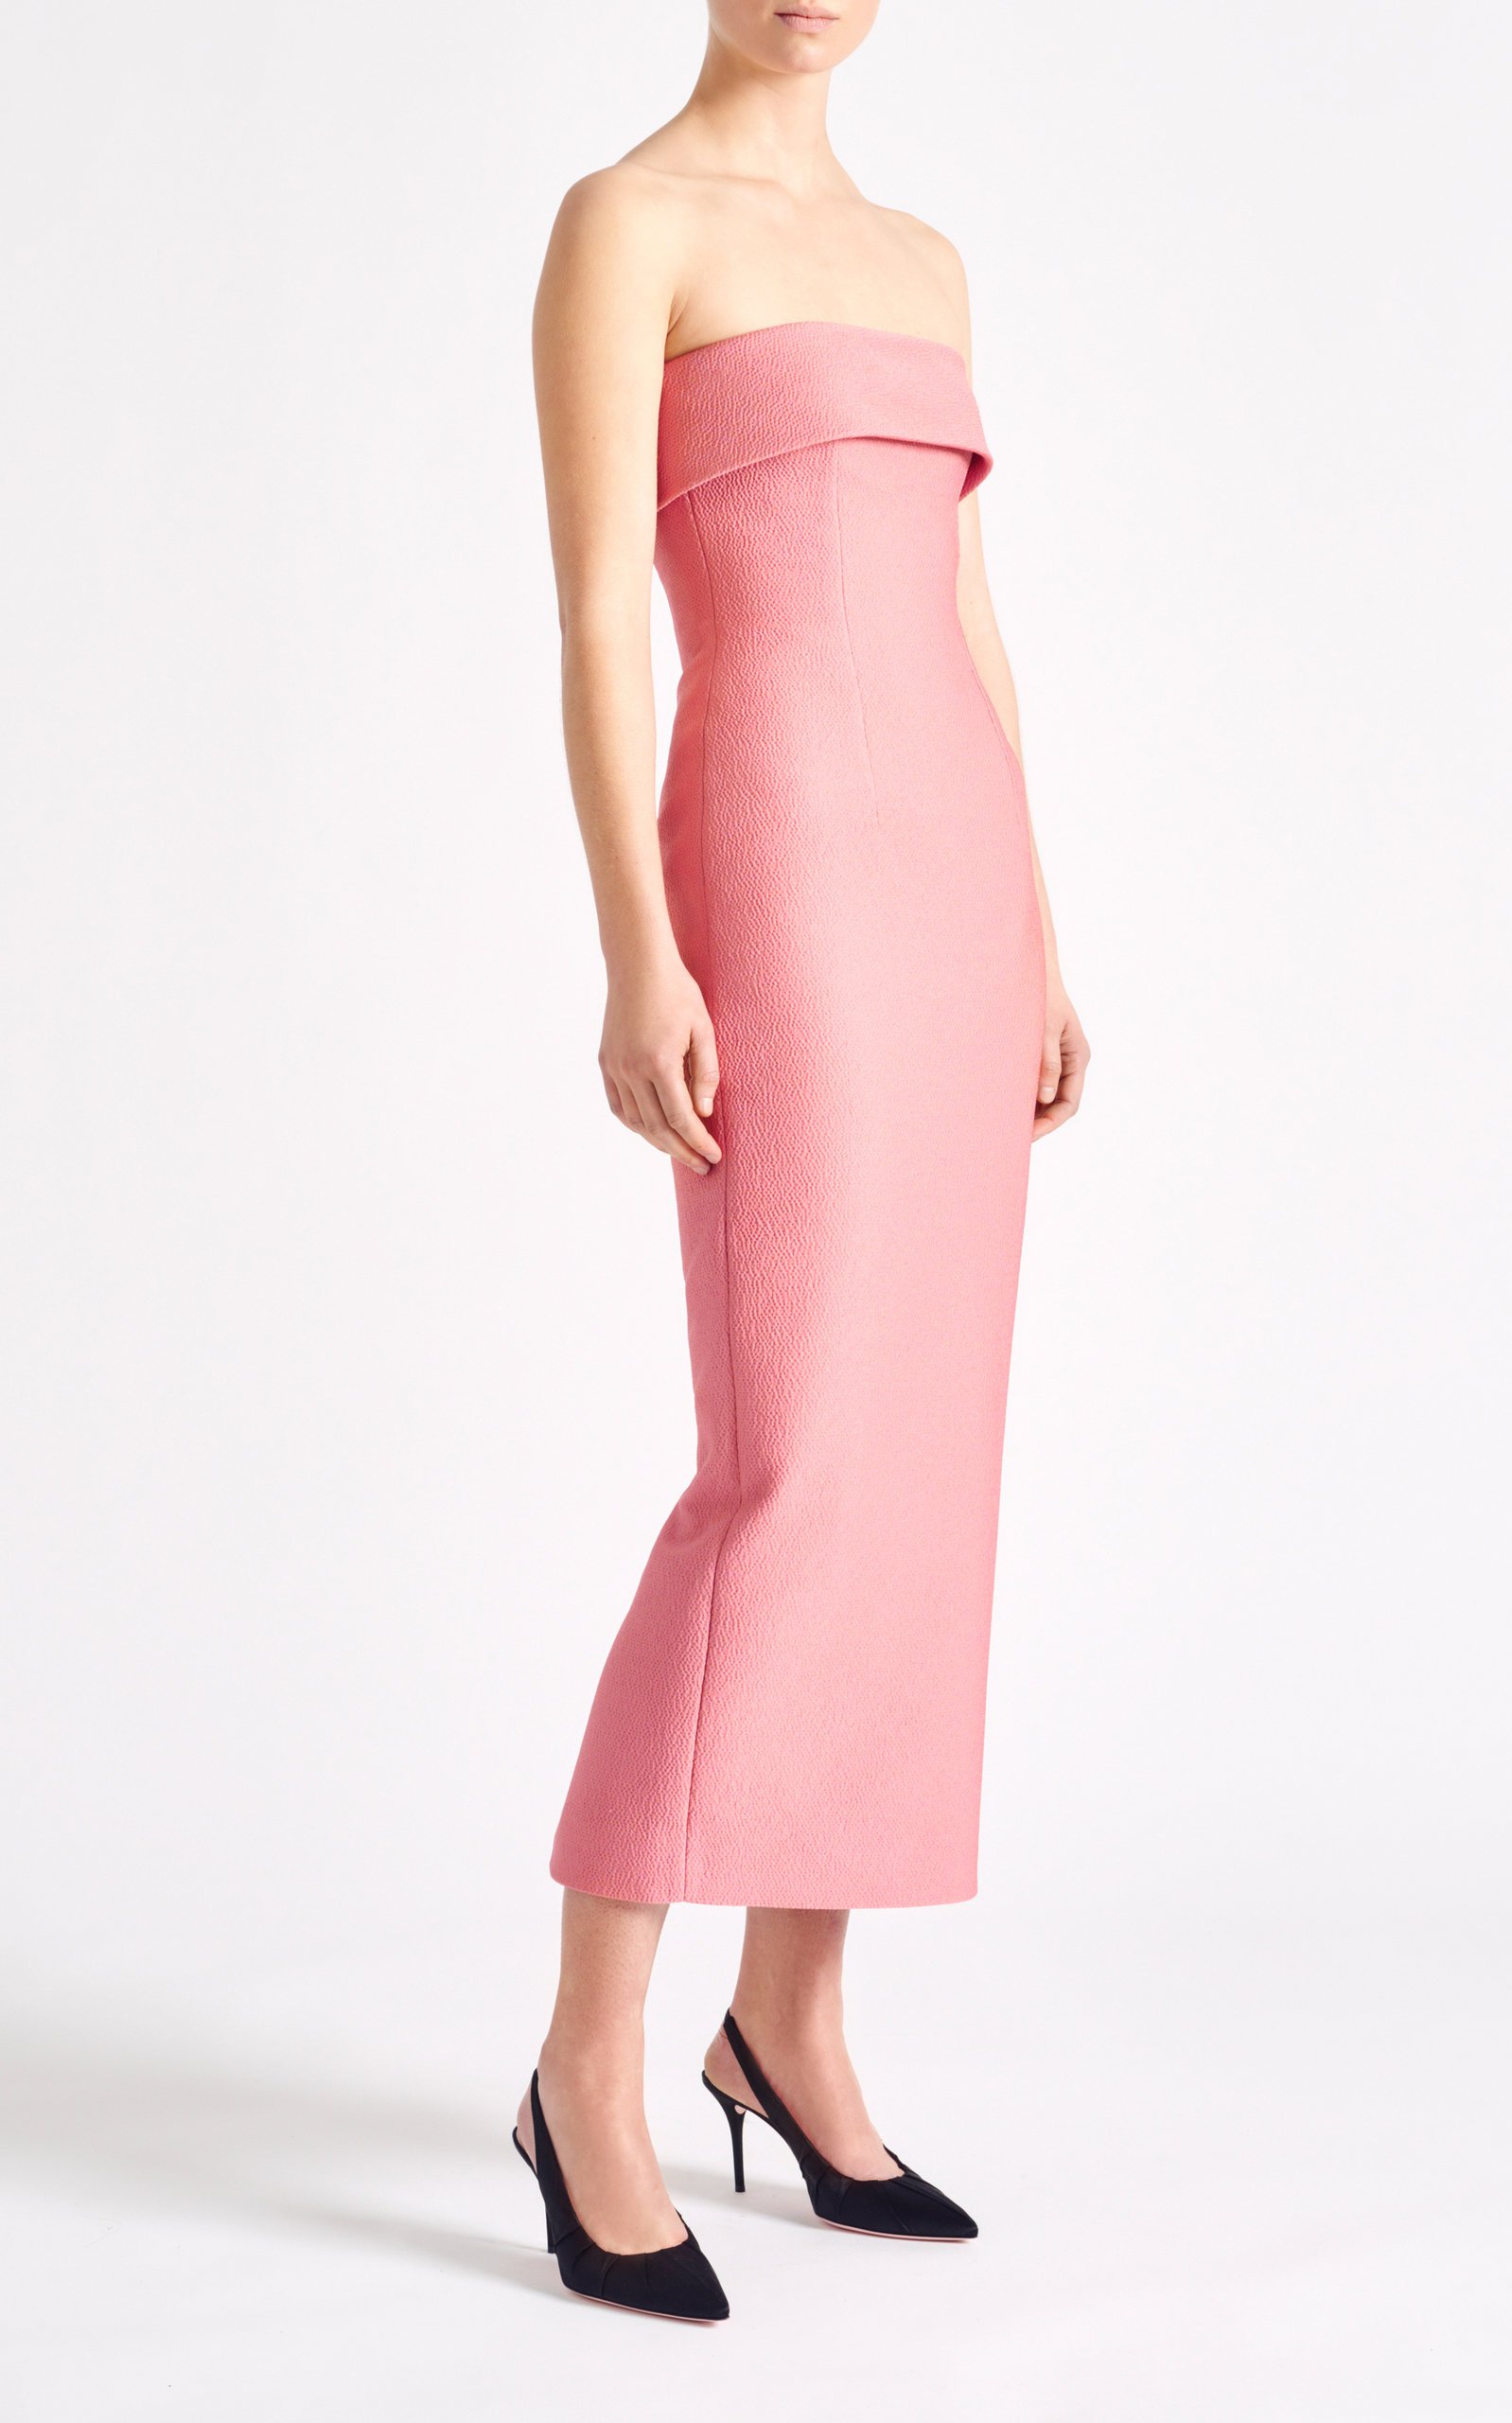 large_emilia-wickstead-pink-keeley-midi-dress.jpeg